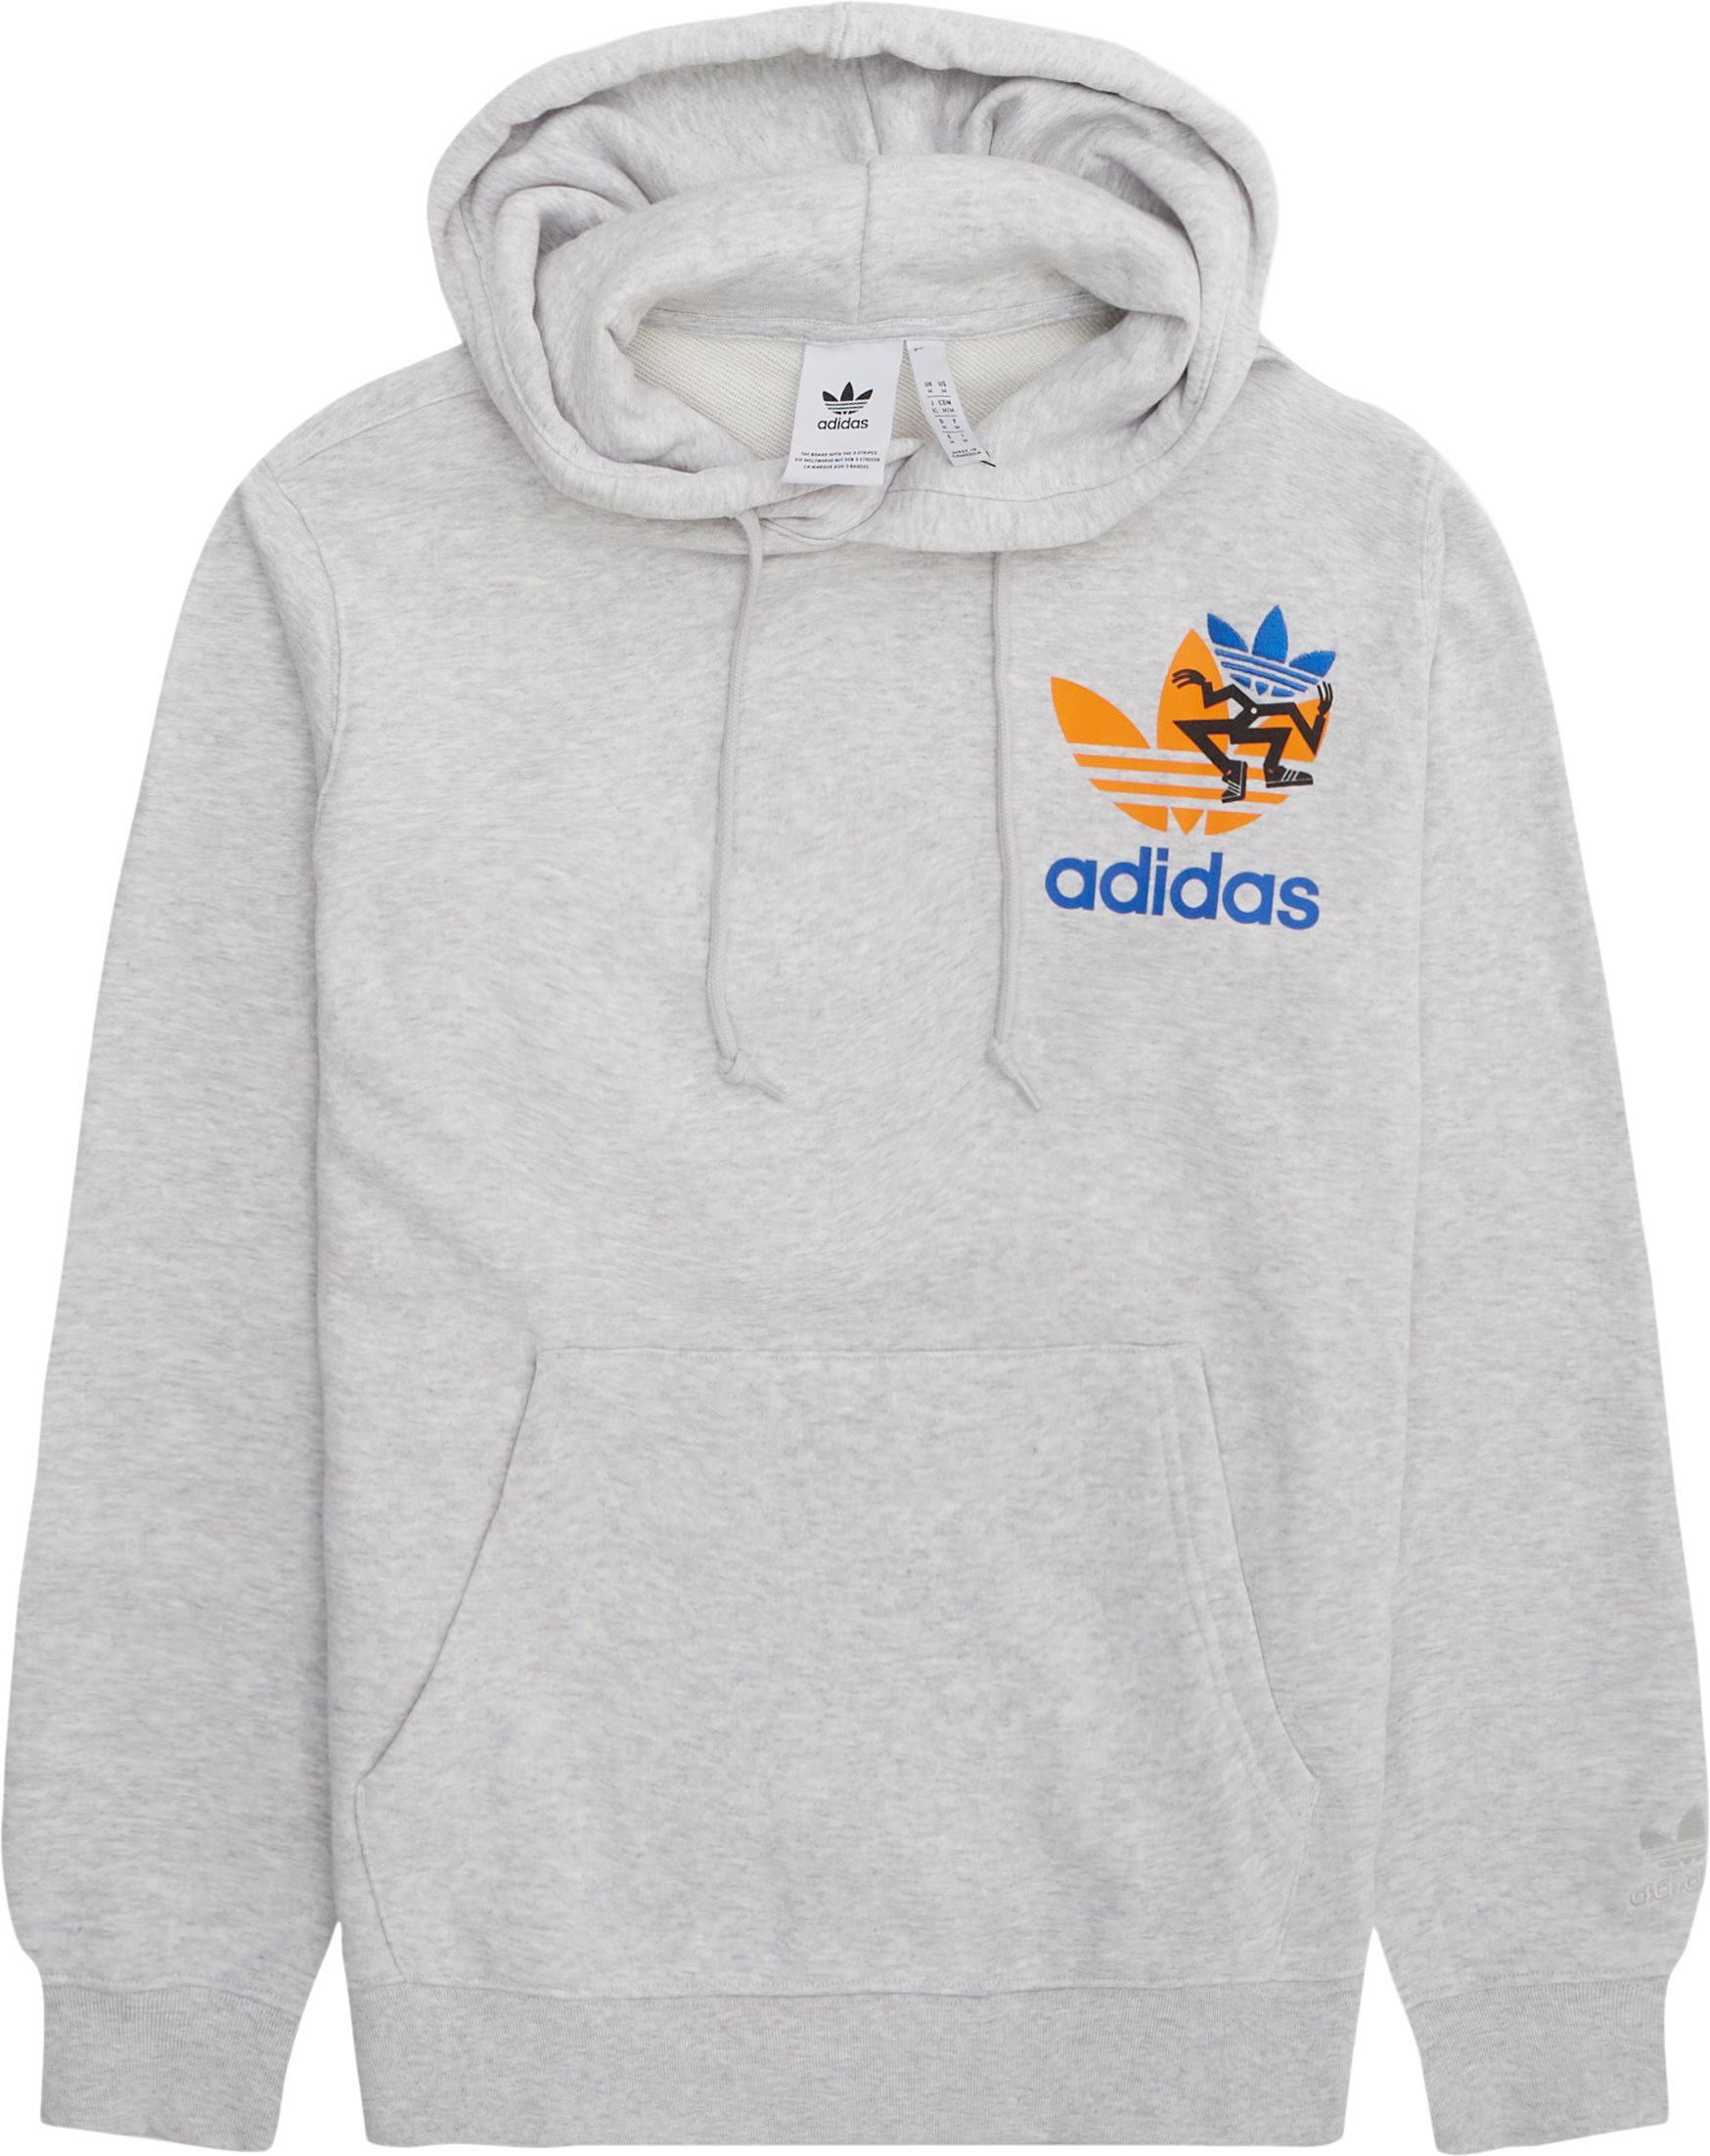 Adidas Originals Sweatshirts TREFOIL HOOD IS2913 Grey